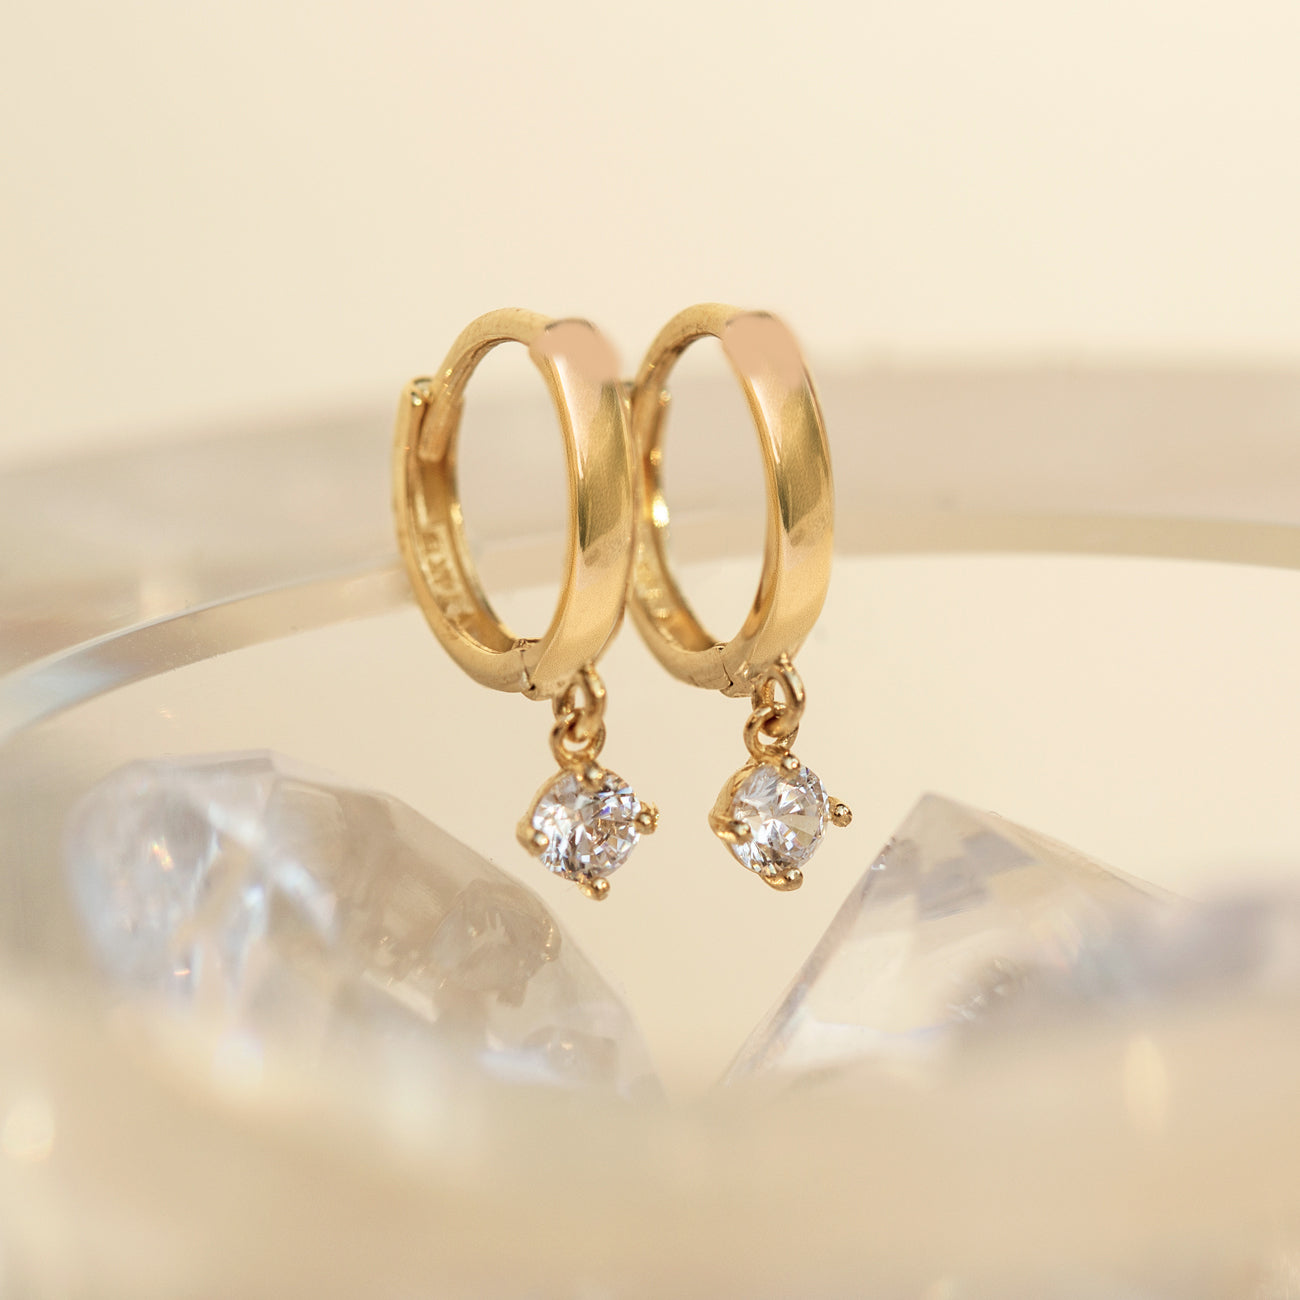 New Designer Ring Type Earrings Jhumka Combo Set of 6 Pairs